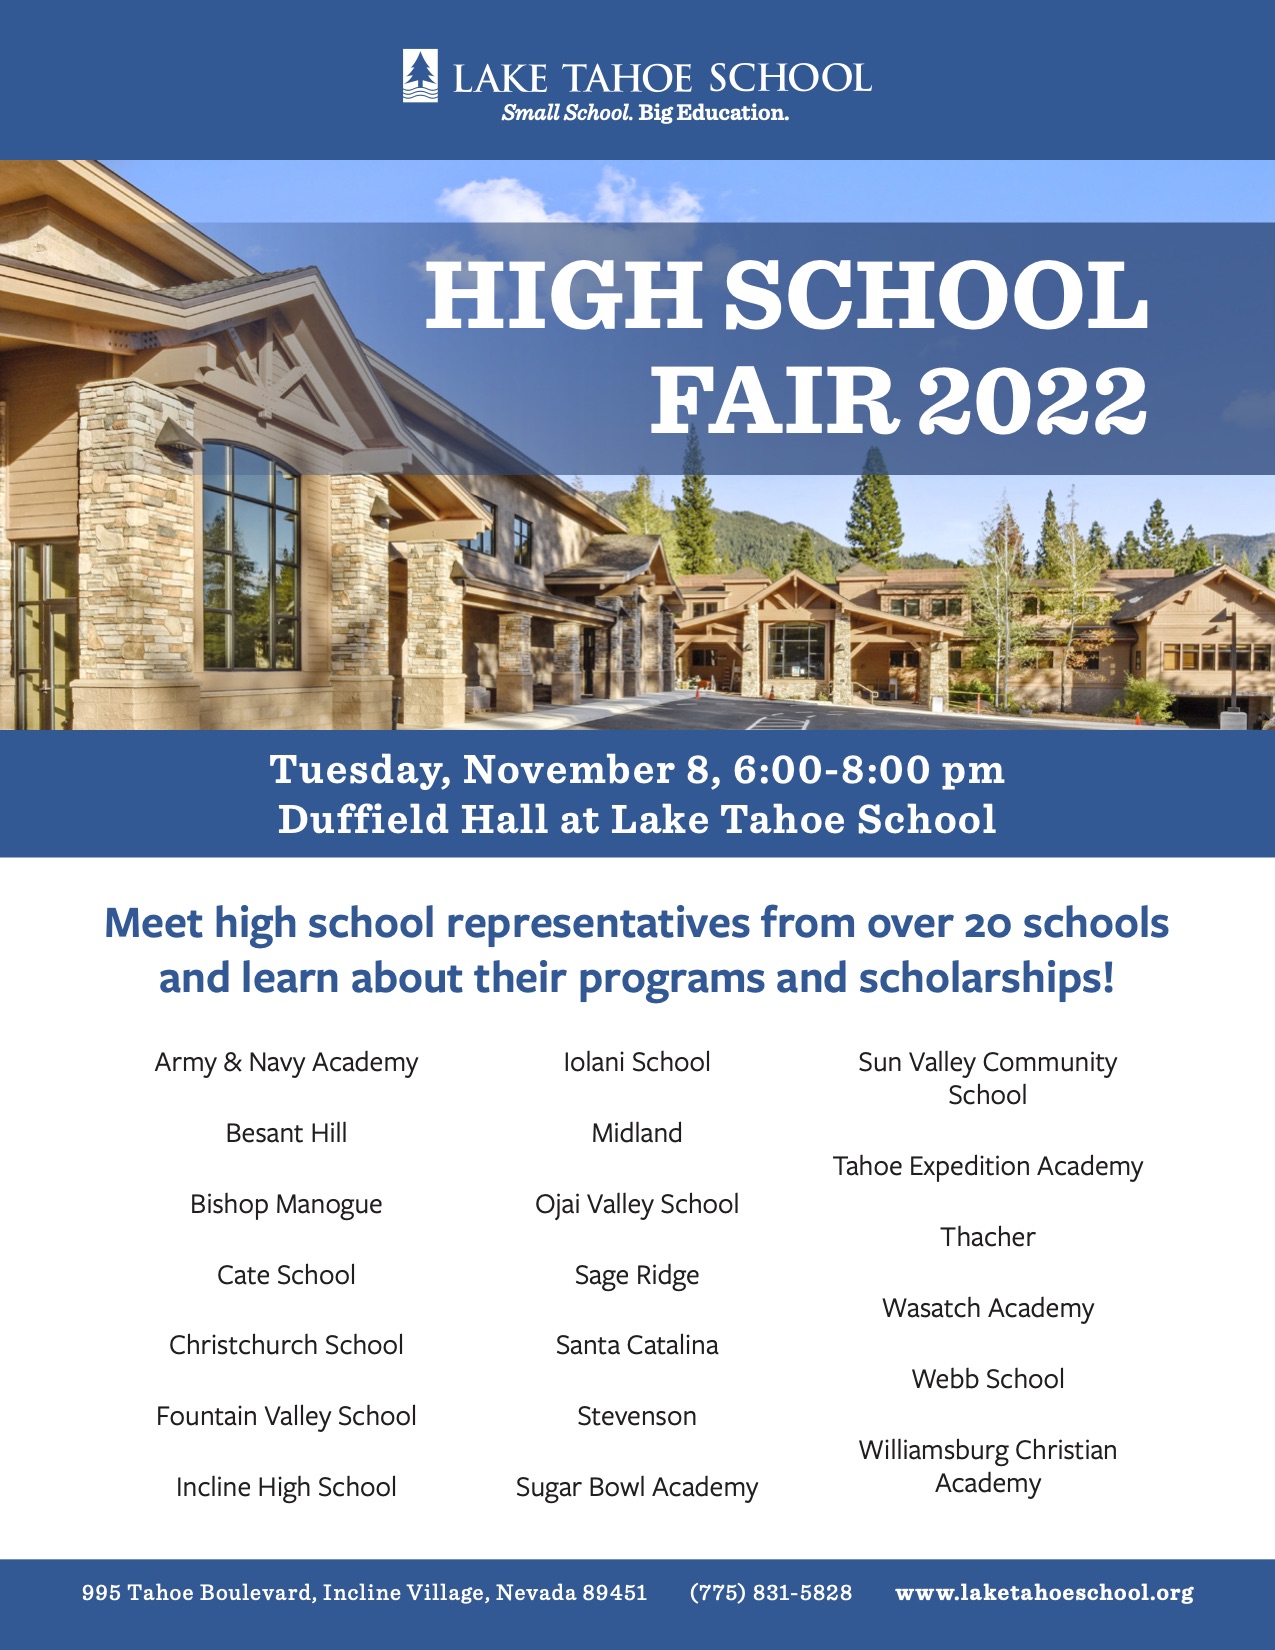 2022 High School Fair Tuesday, November 8 Lake Tahoe School